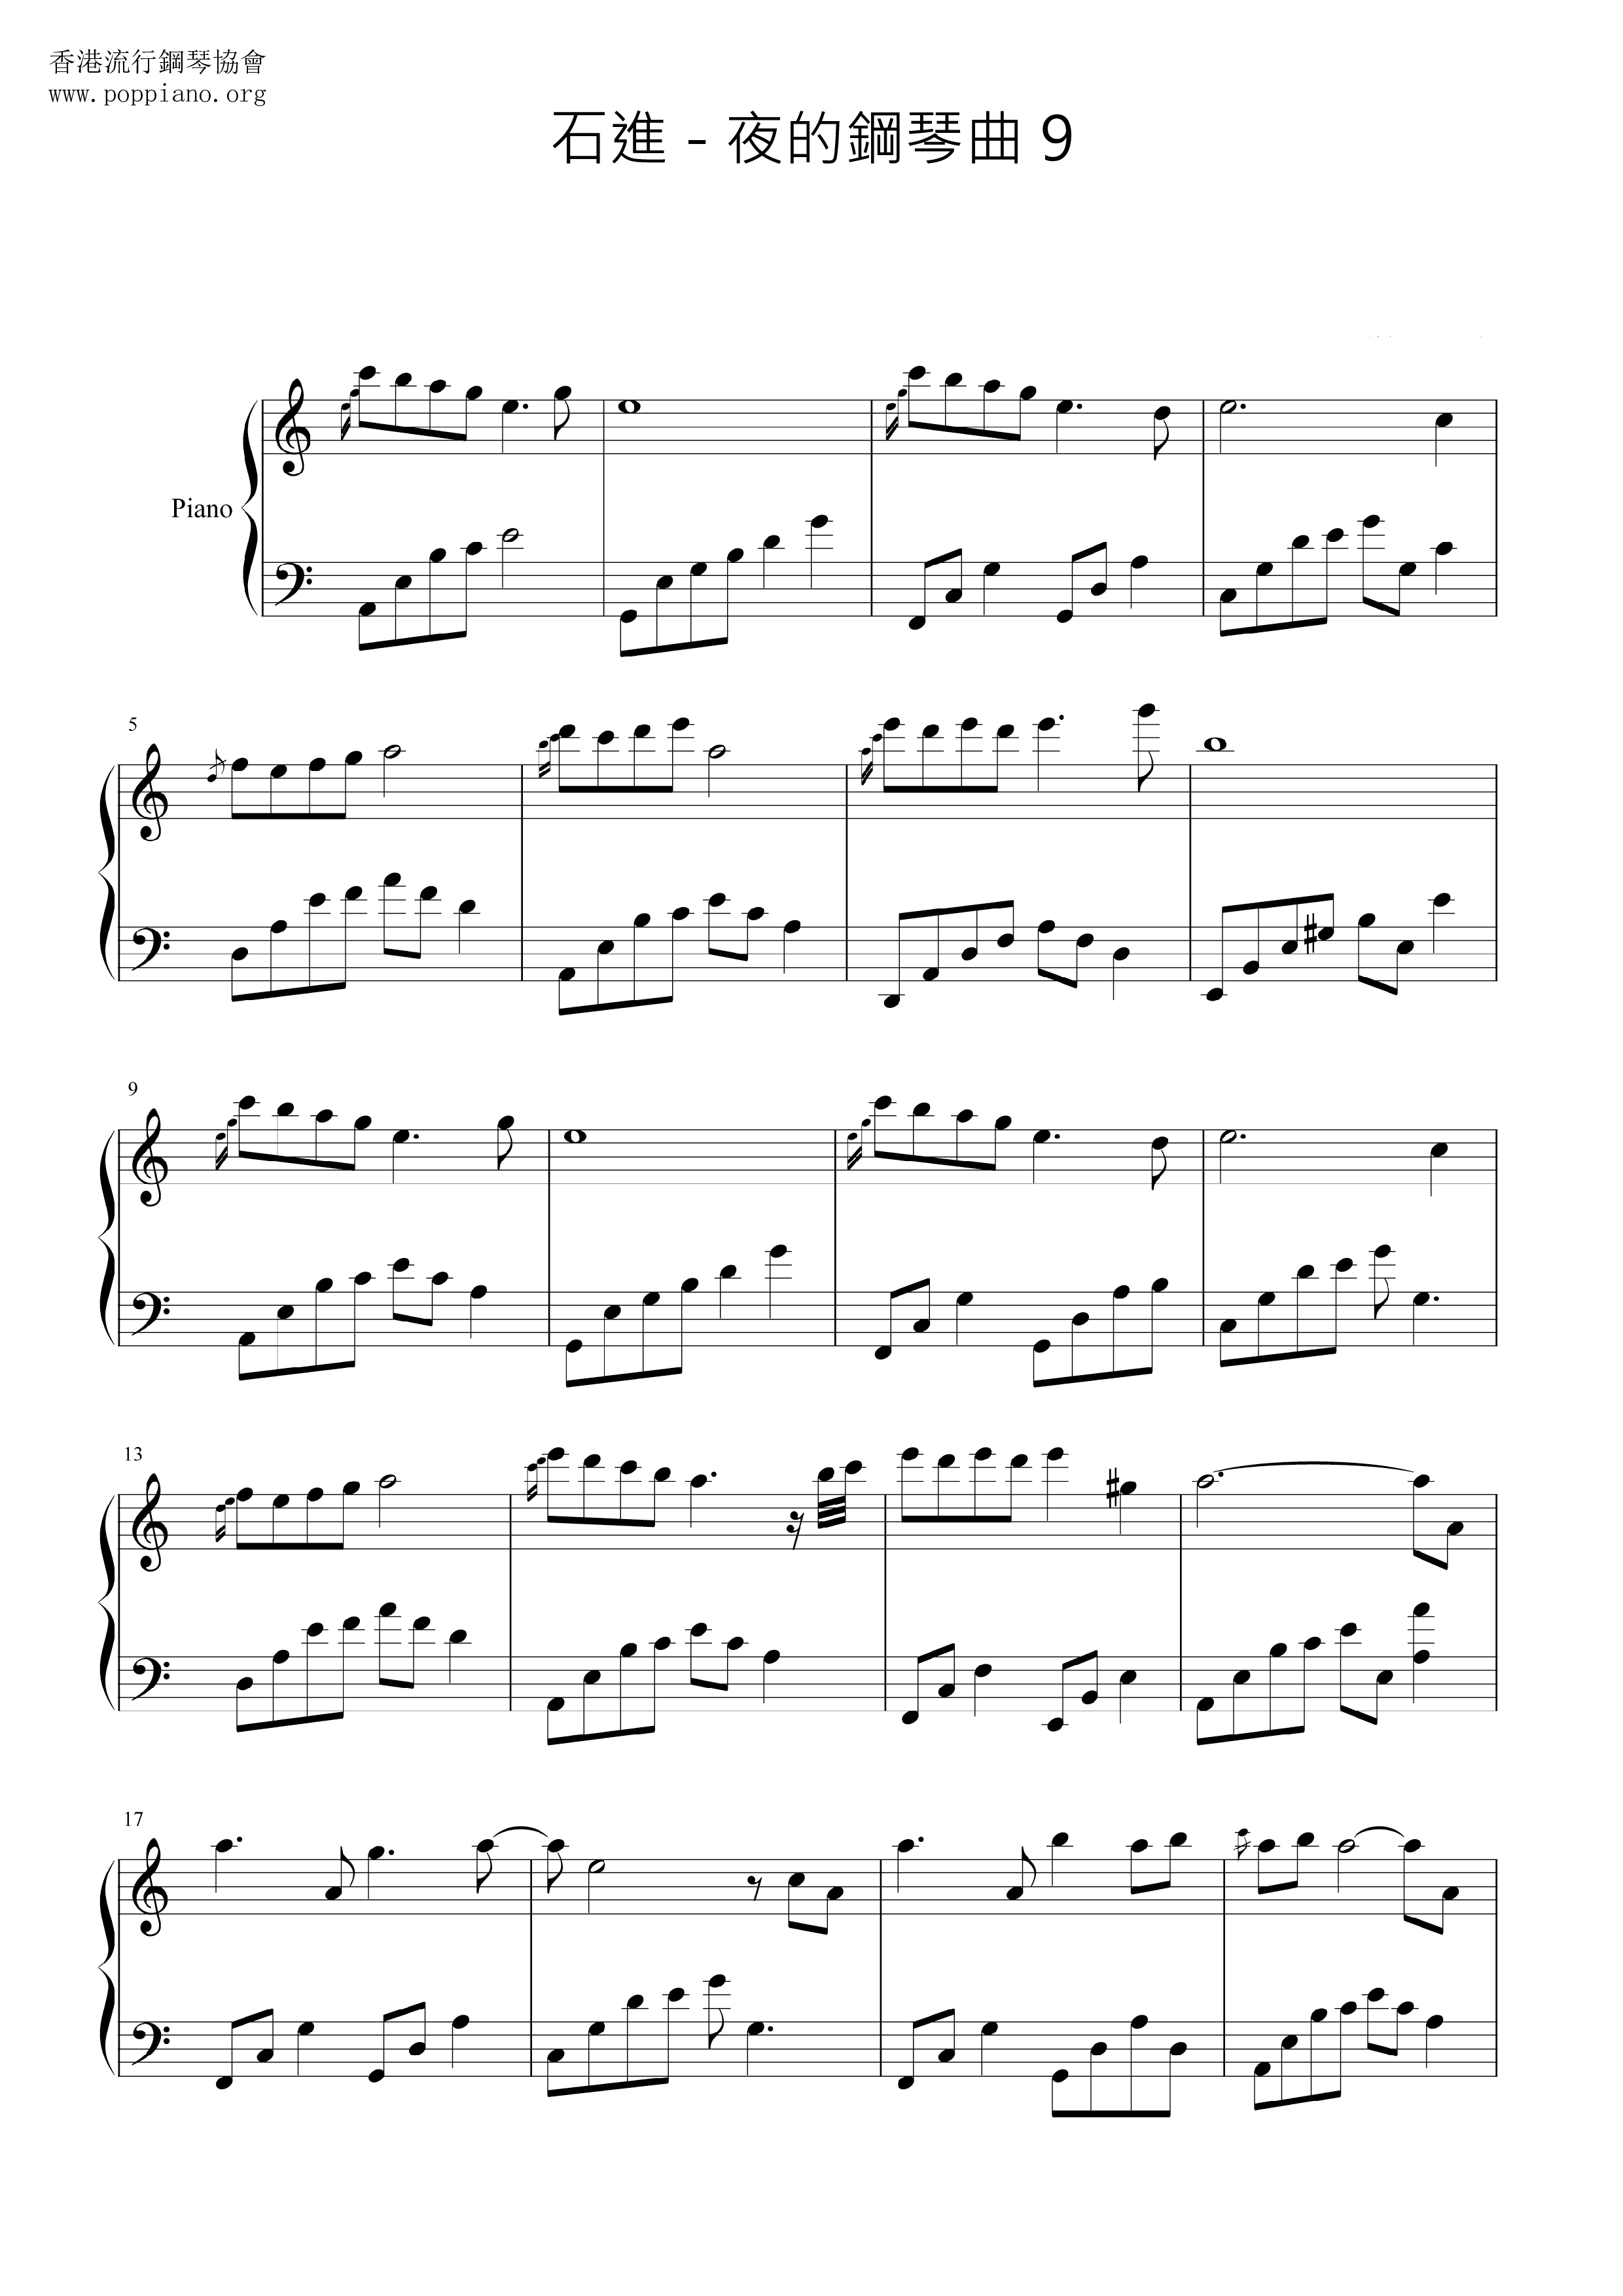 Melody Of The Night 9 Score